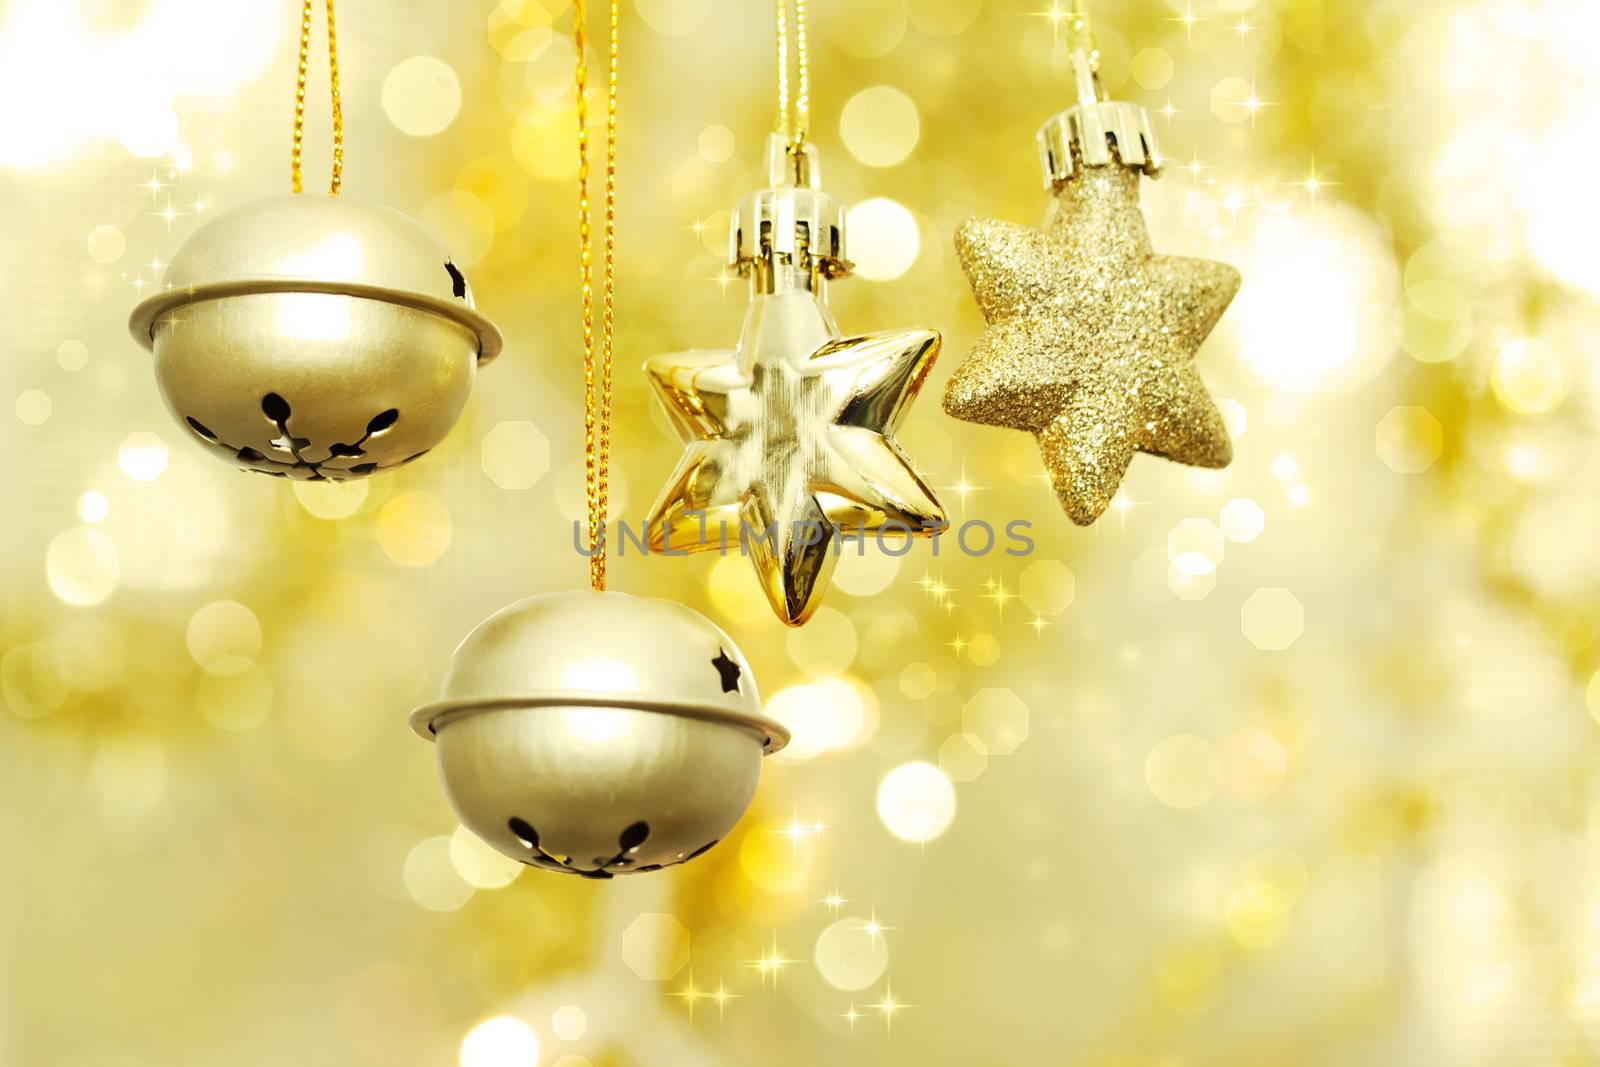 Christmas ornaments by melpomene